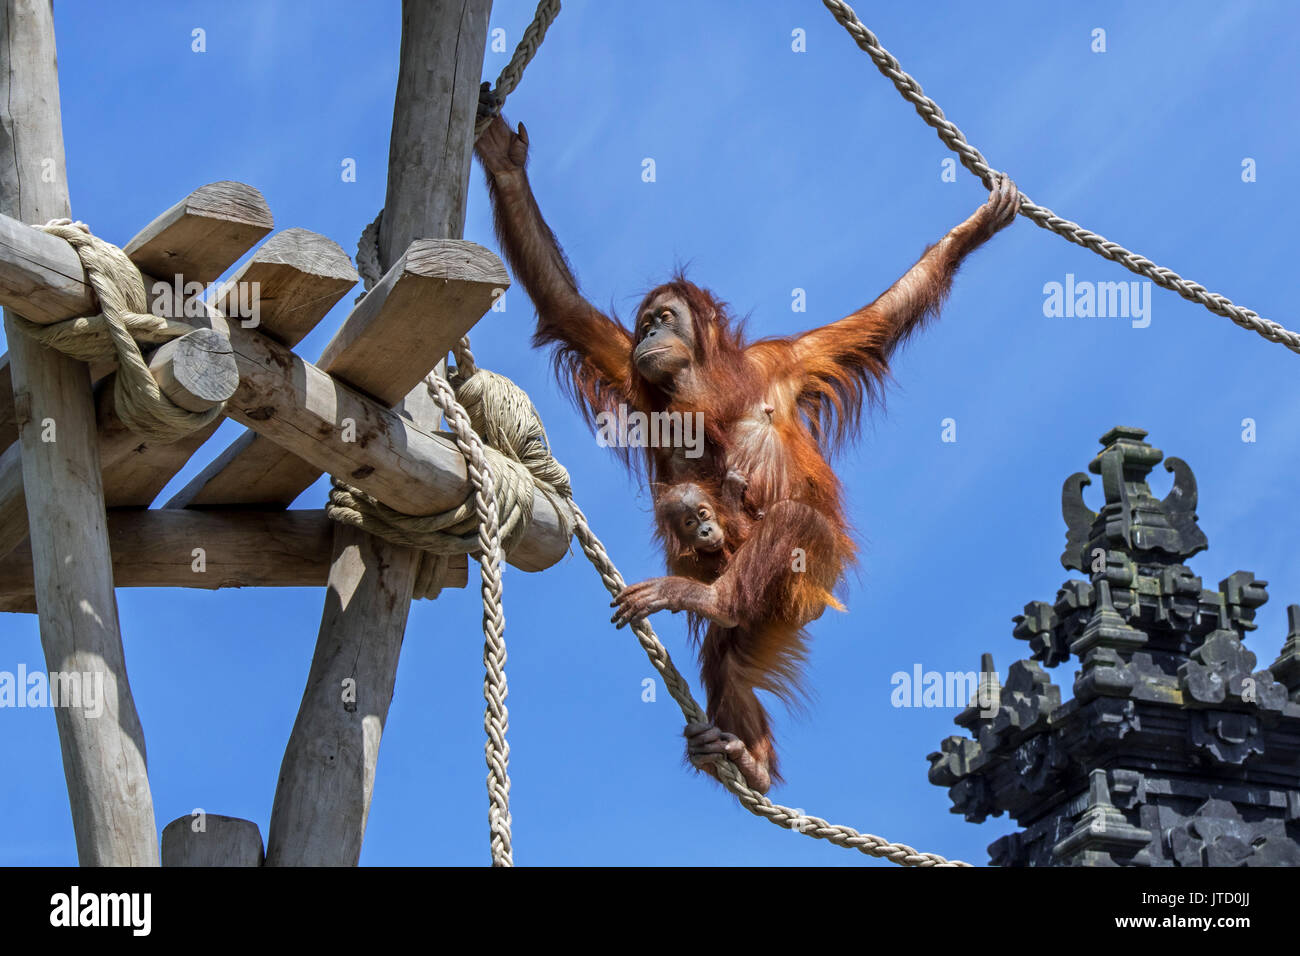 Sumatran orangutan / orang-utang (Pongo abelii) female with baby clinging on her belly traversing on ropes in zoo, native to Sumatra Stock Photo